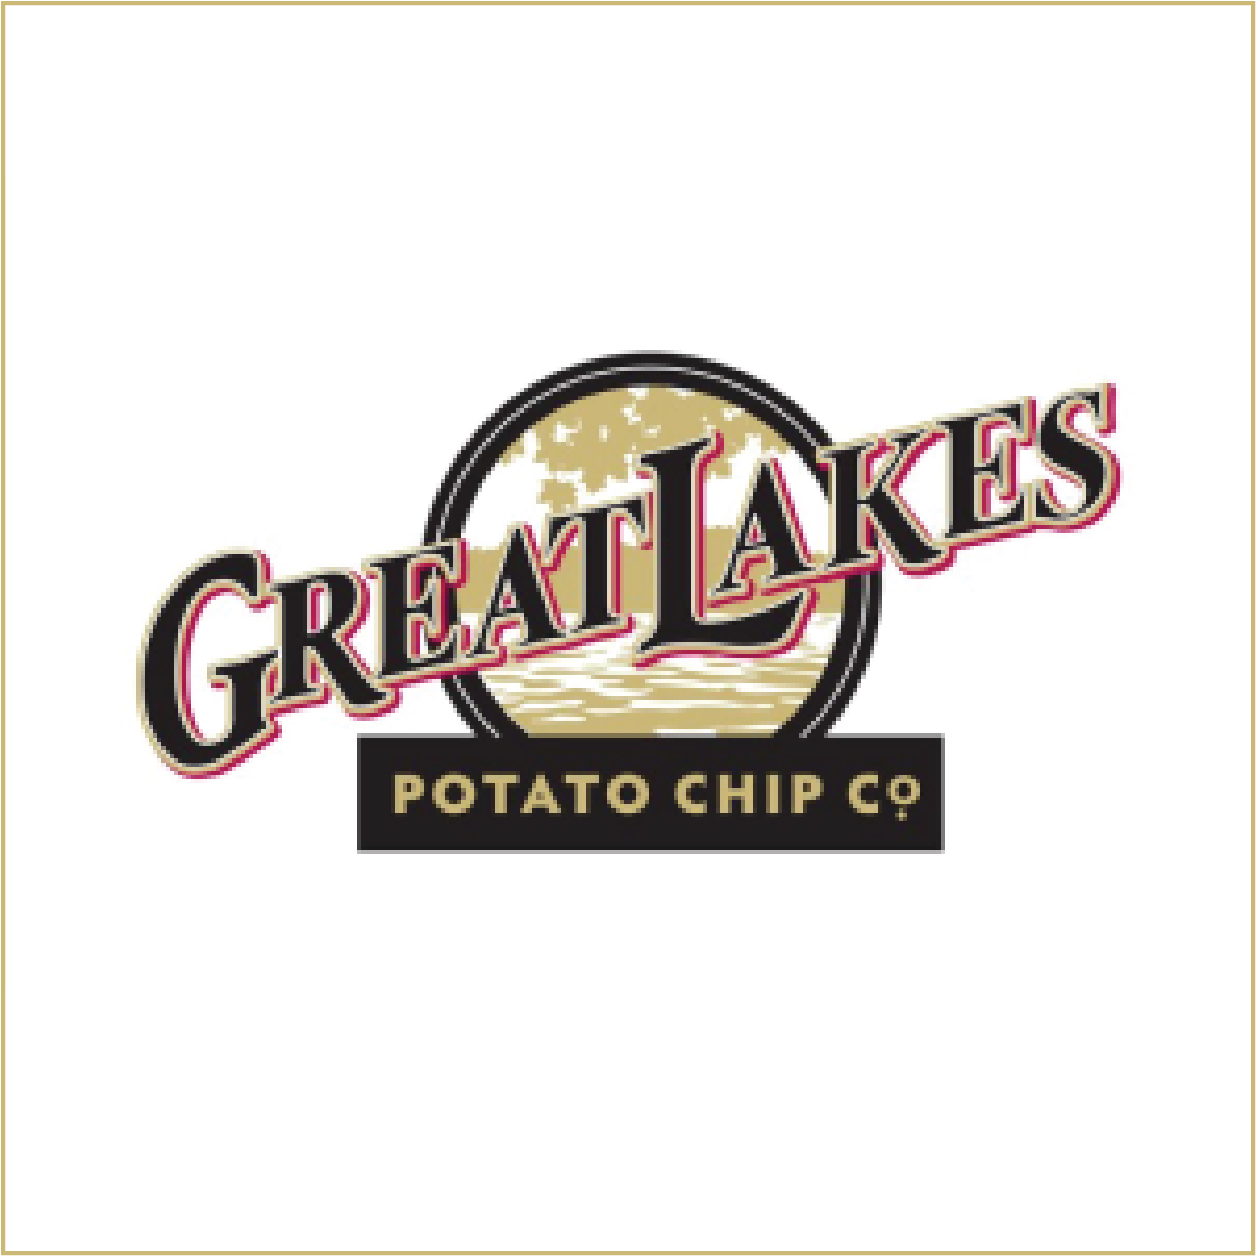 Great Lakes Potato Chips